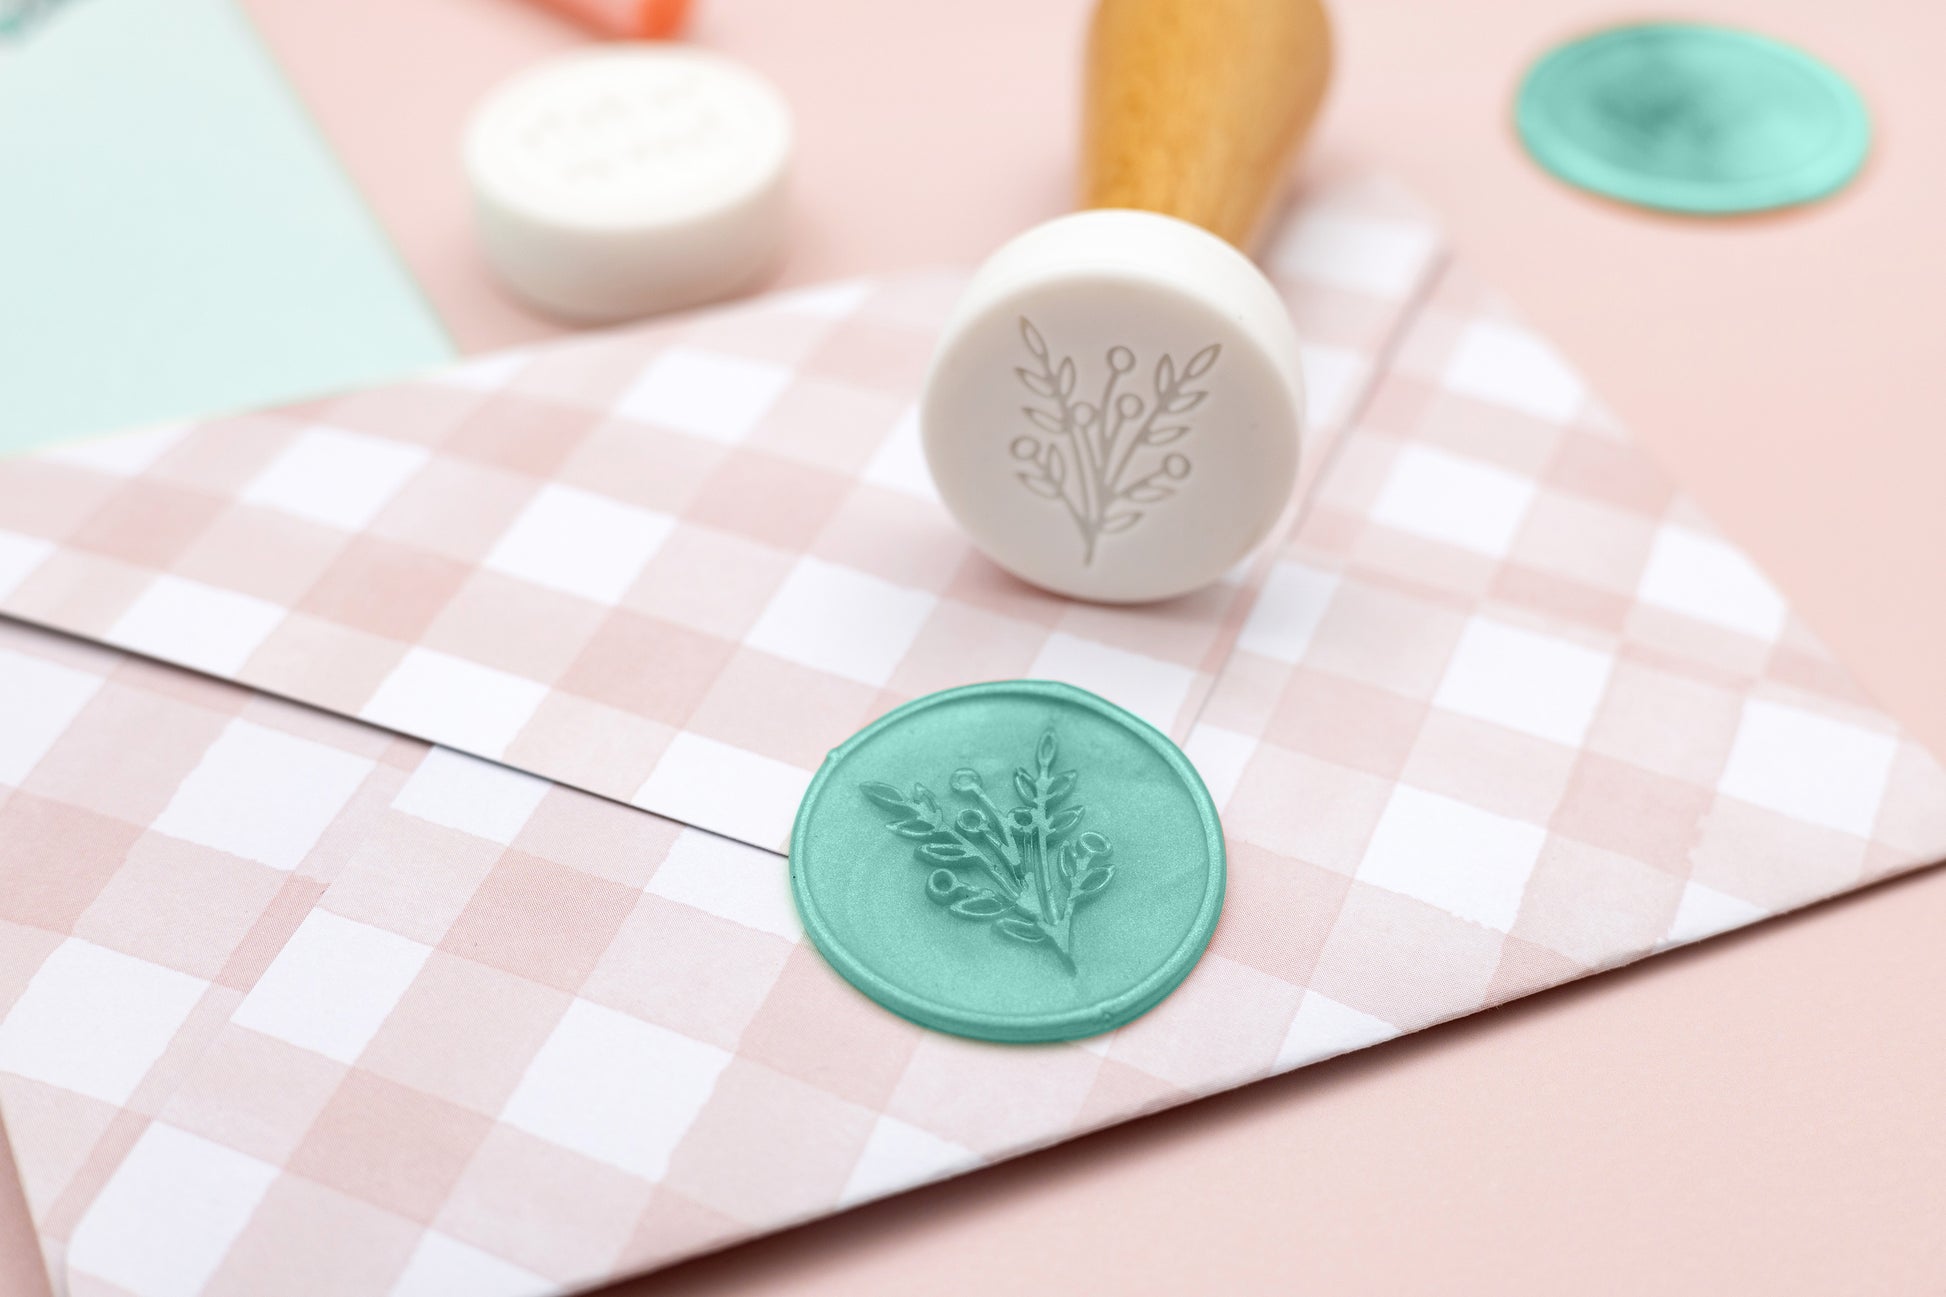 We R Memory Keepers Envelope Seal Kit-With Love – American Crafts